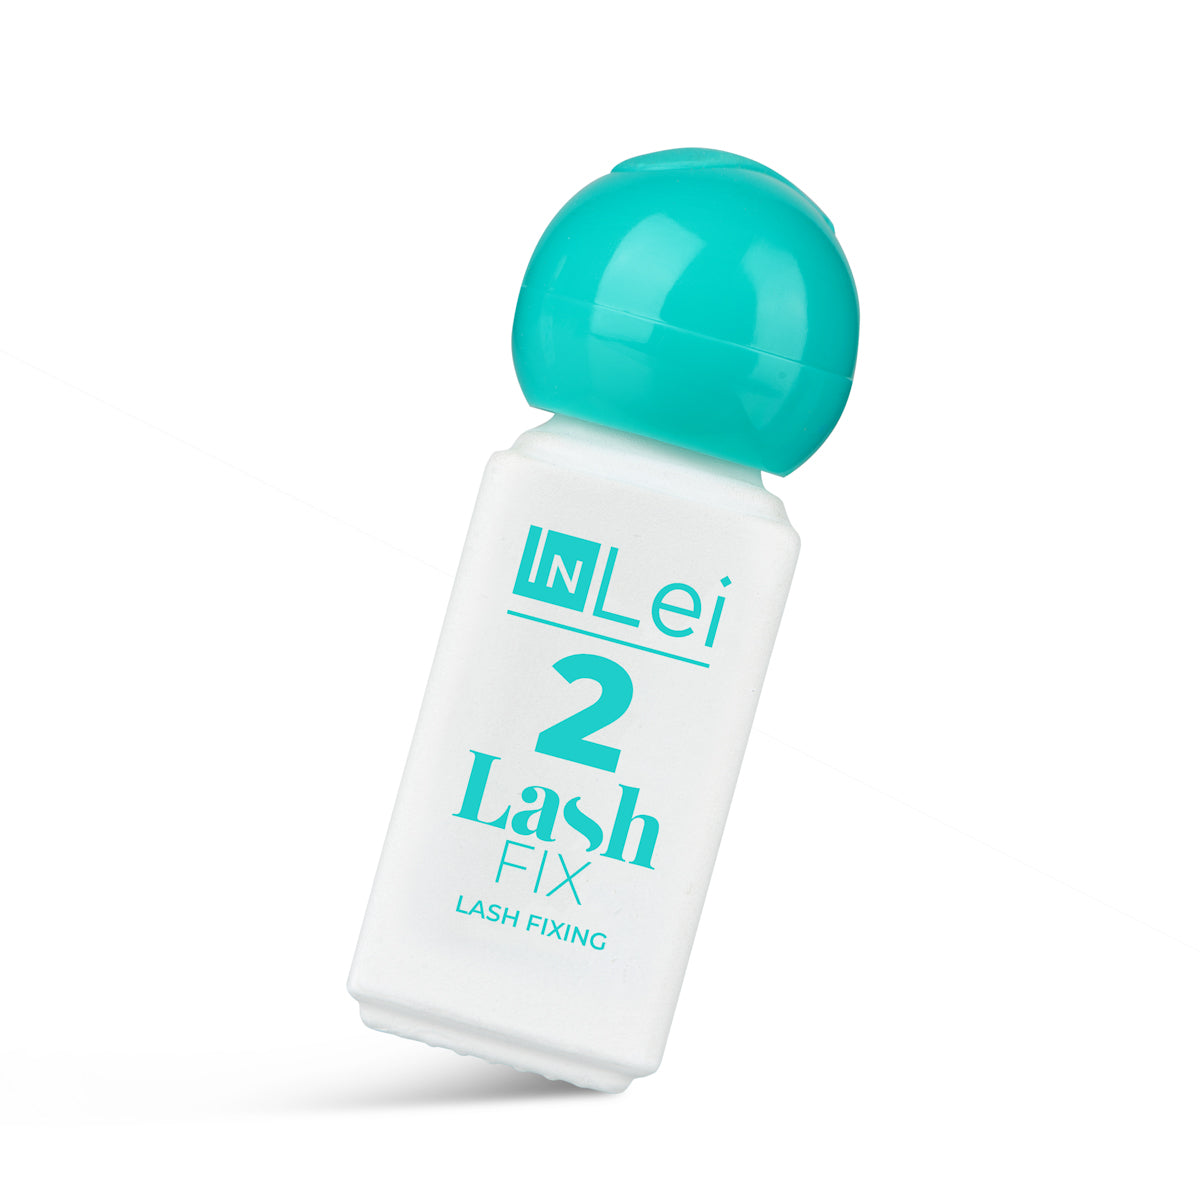 InLei - FIX2 - 4ml bottle - 25.9 series